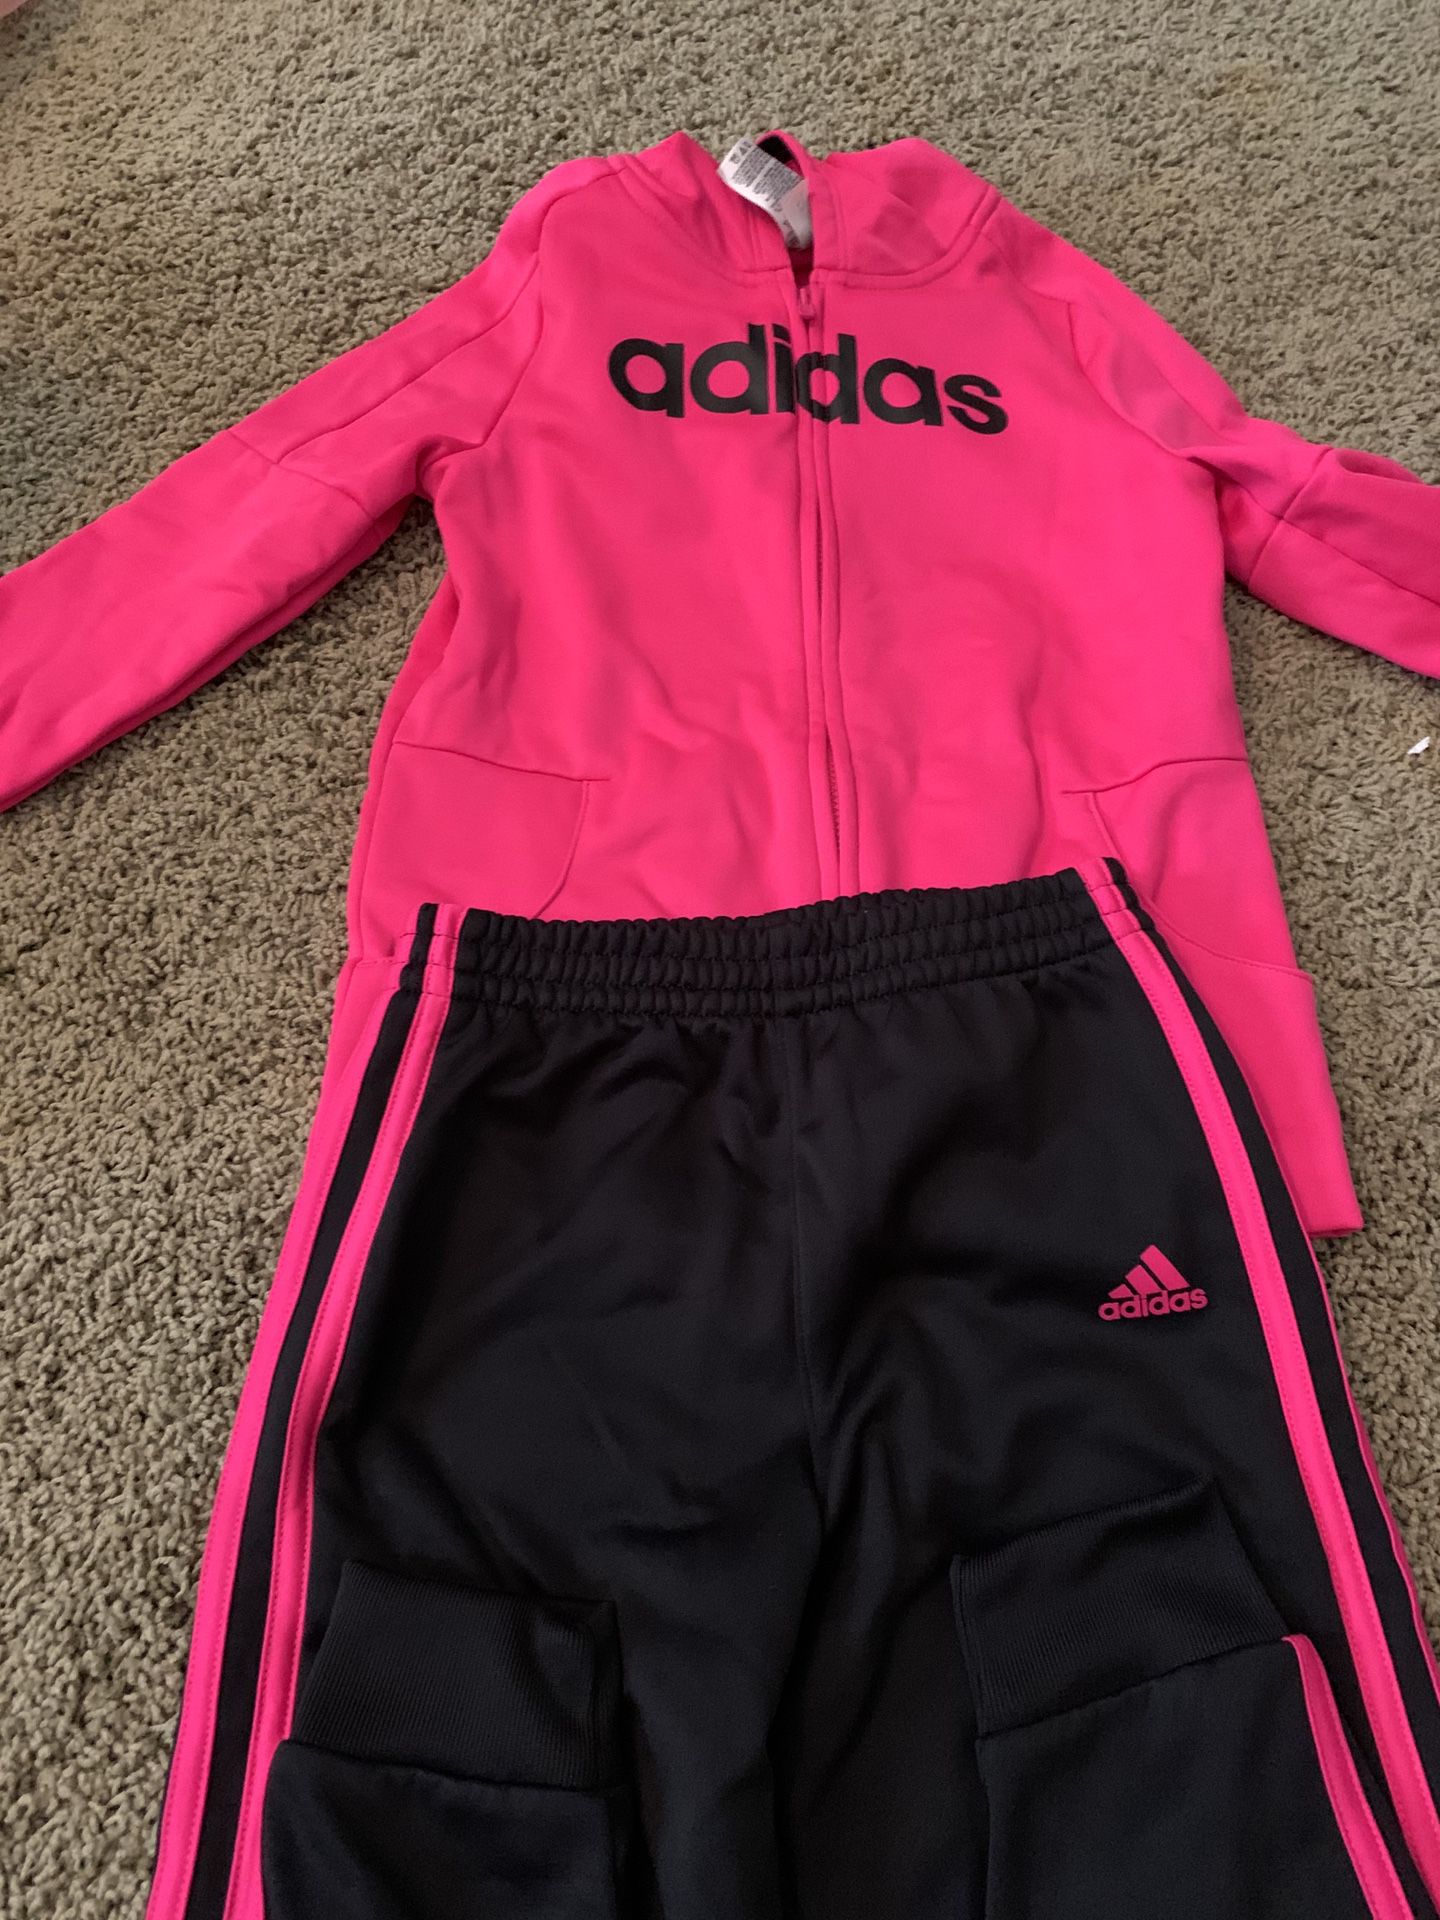 Kids adidas track suit set (size youth 6)